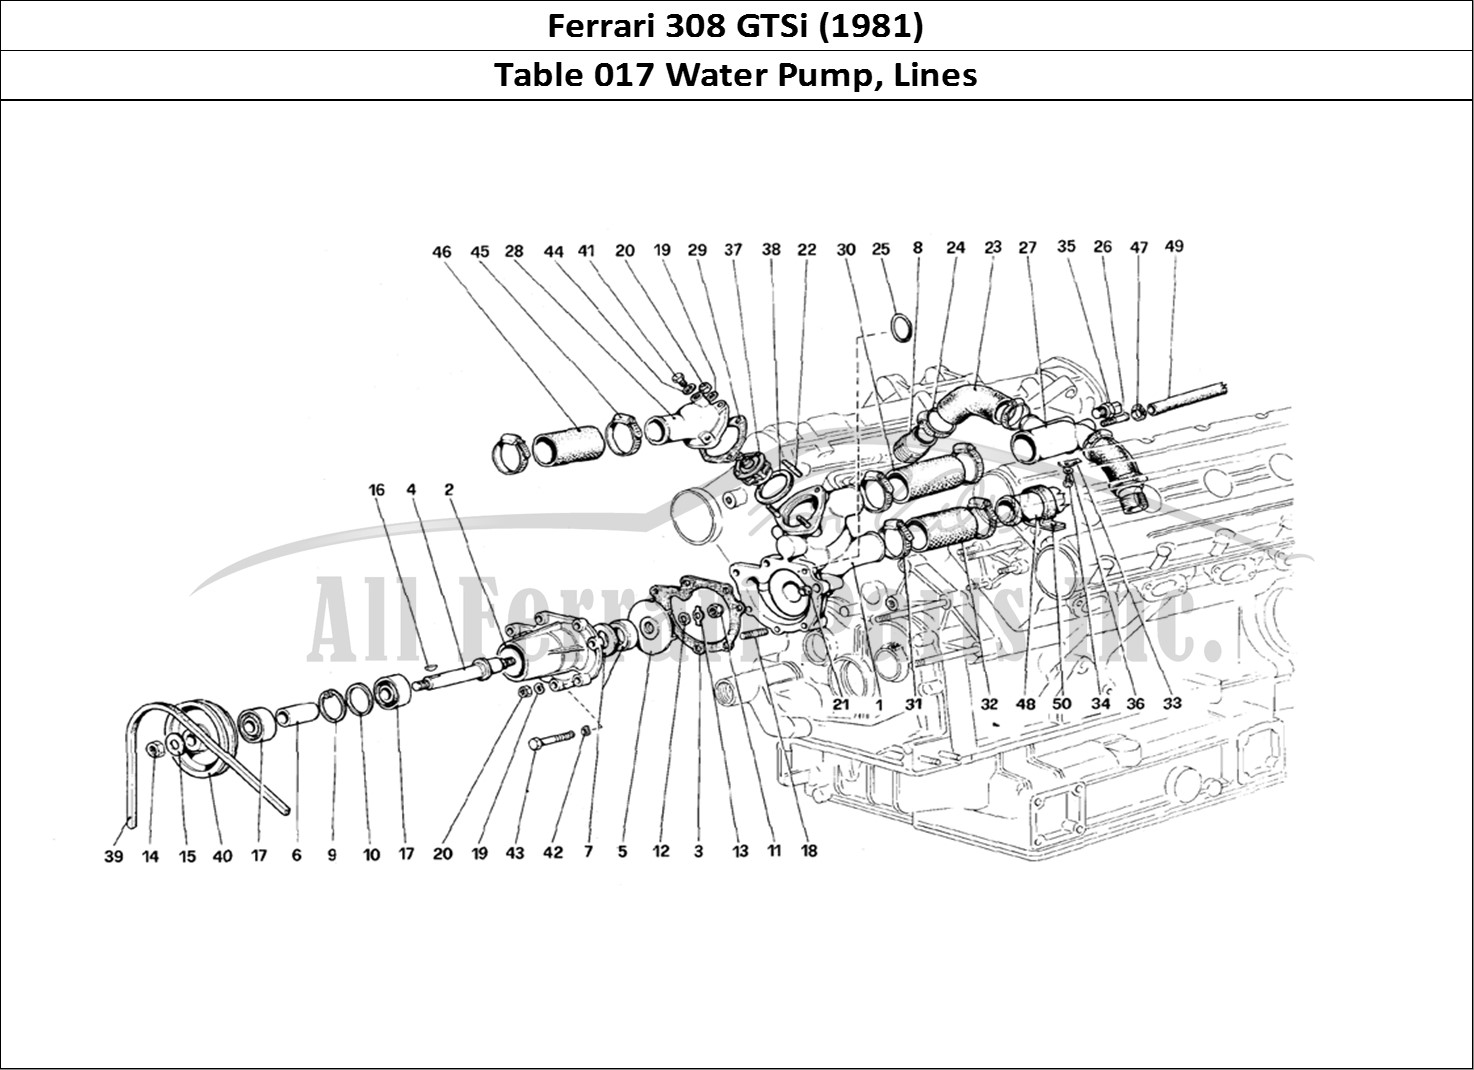 Ferrari Parts Ferrari 308 GTBi (1981) Page 017 Water Pump and Pipings